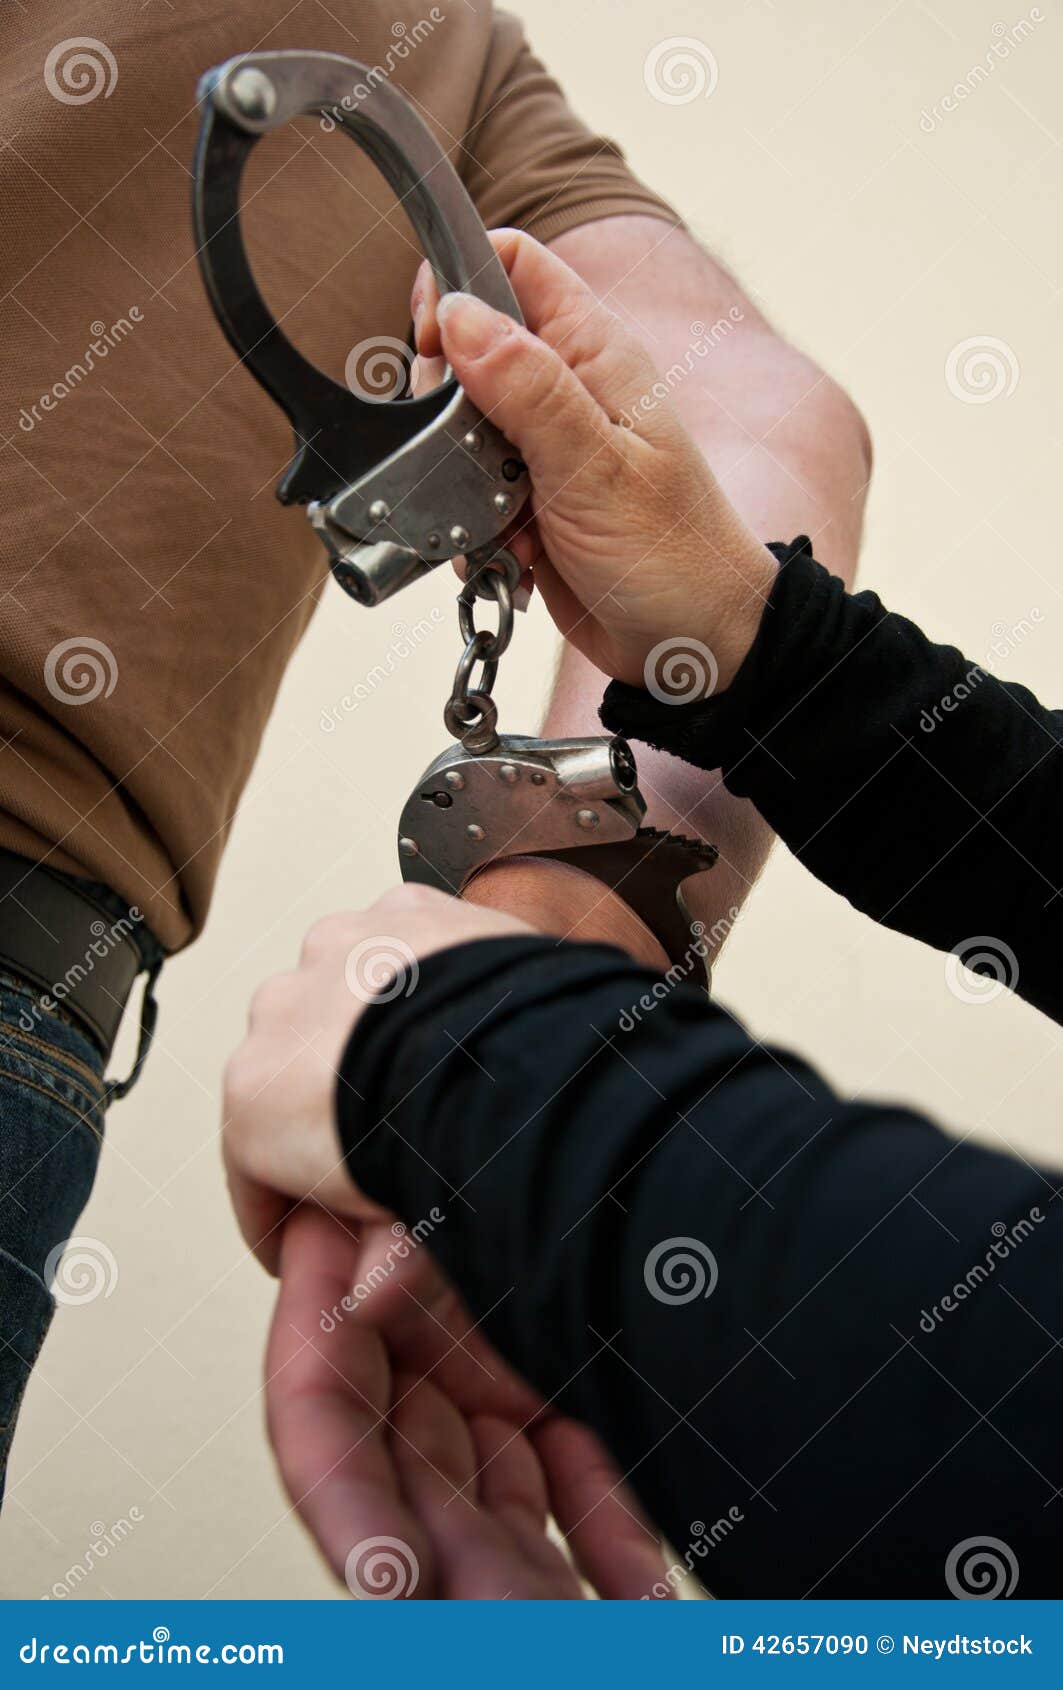 Парень надевает наручники. Мужчина в наручниках. Надевают наручники. Застегивают наручники. Преступник в наручниках.